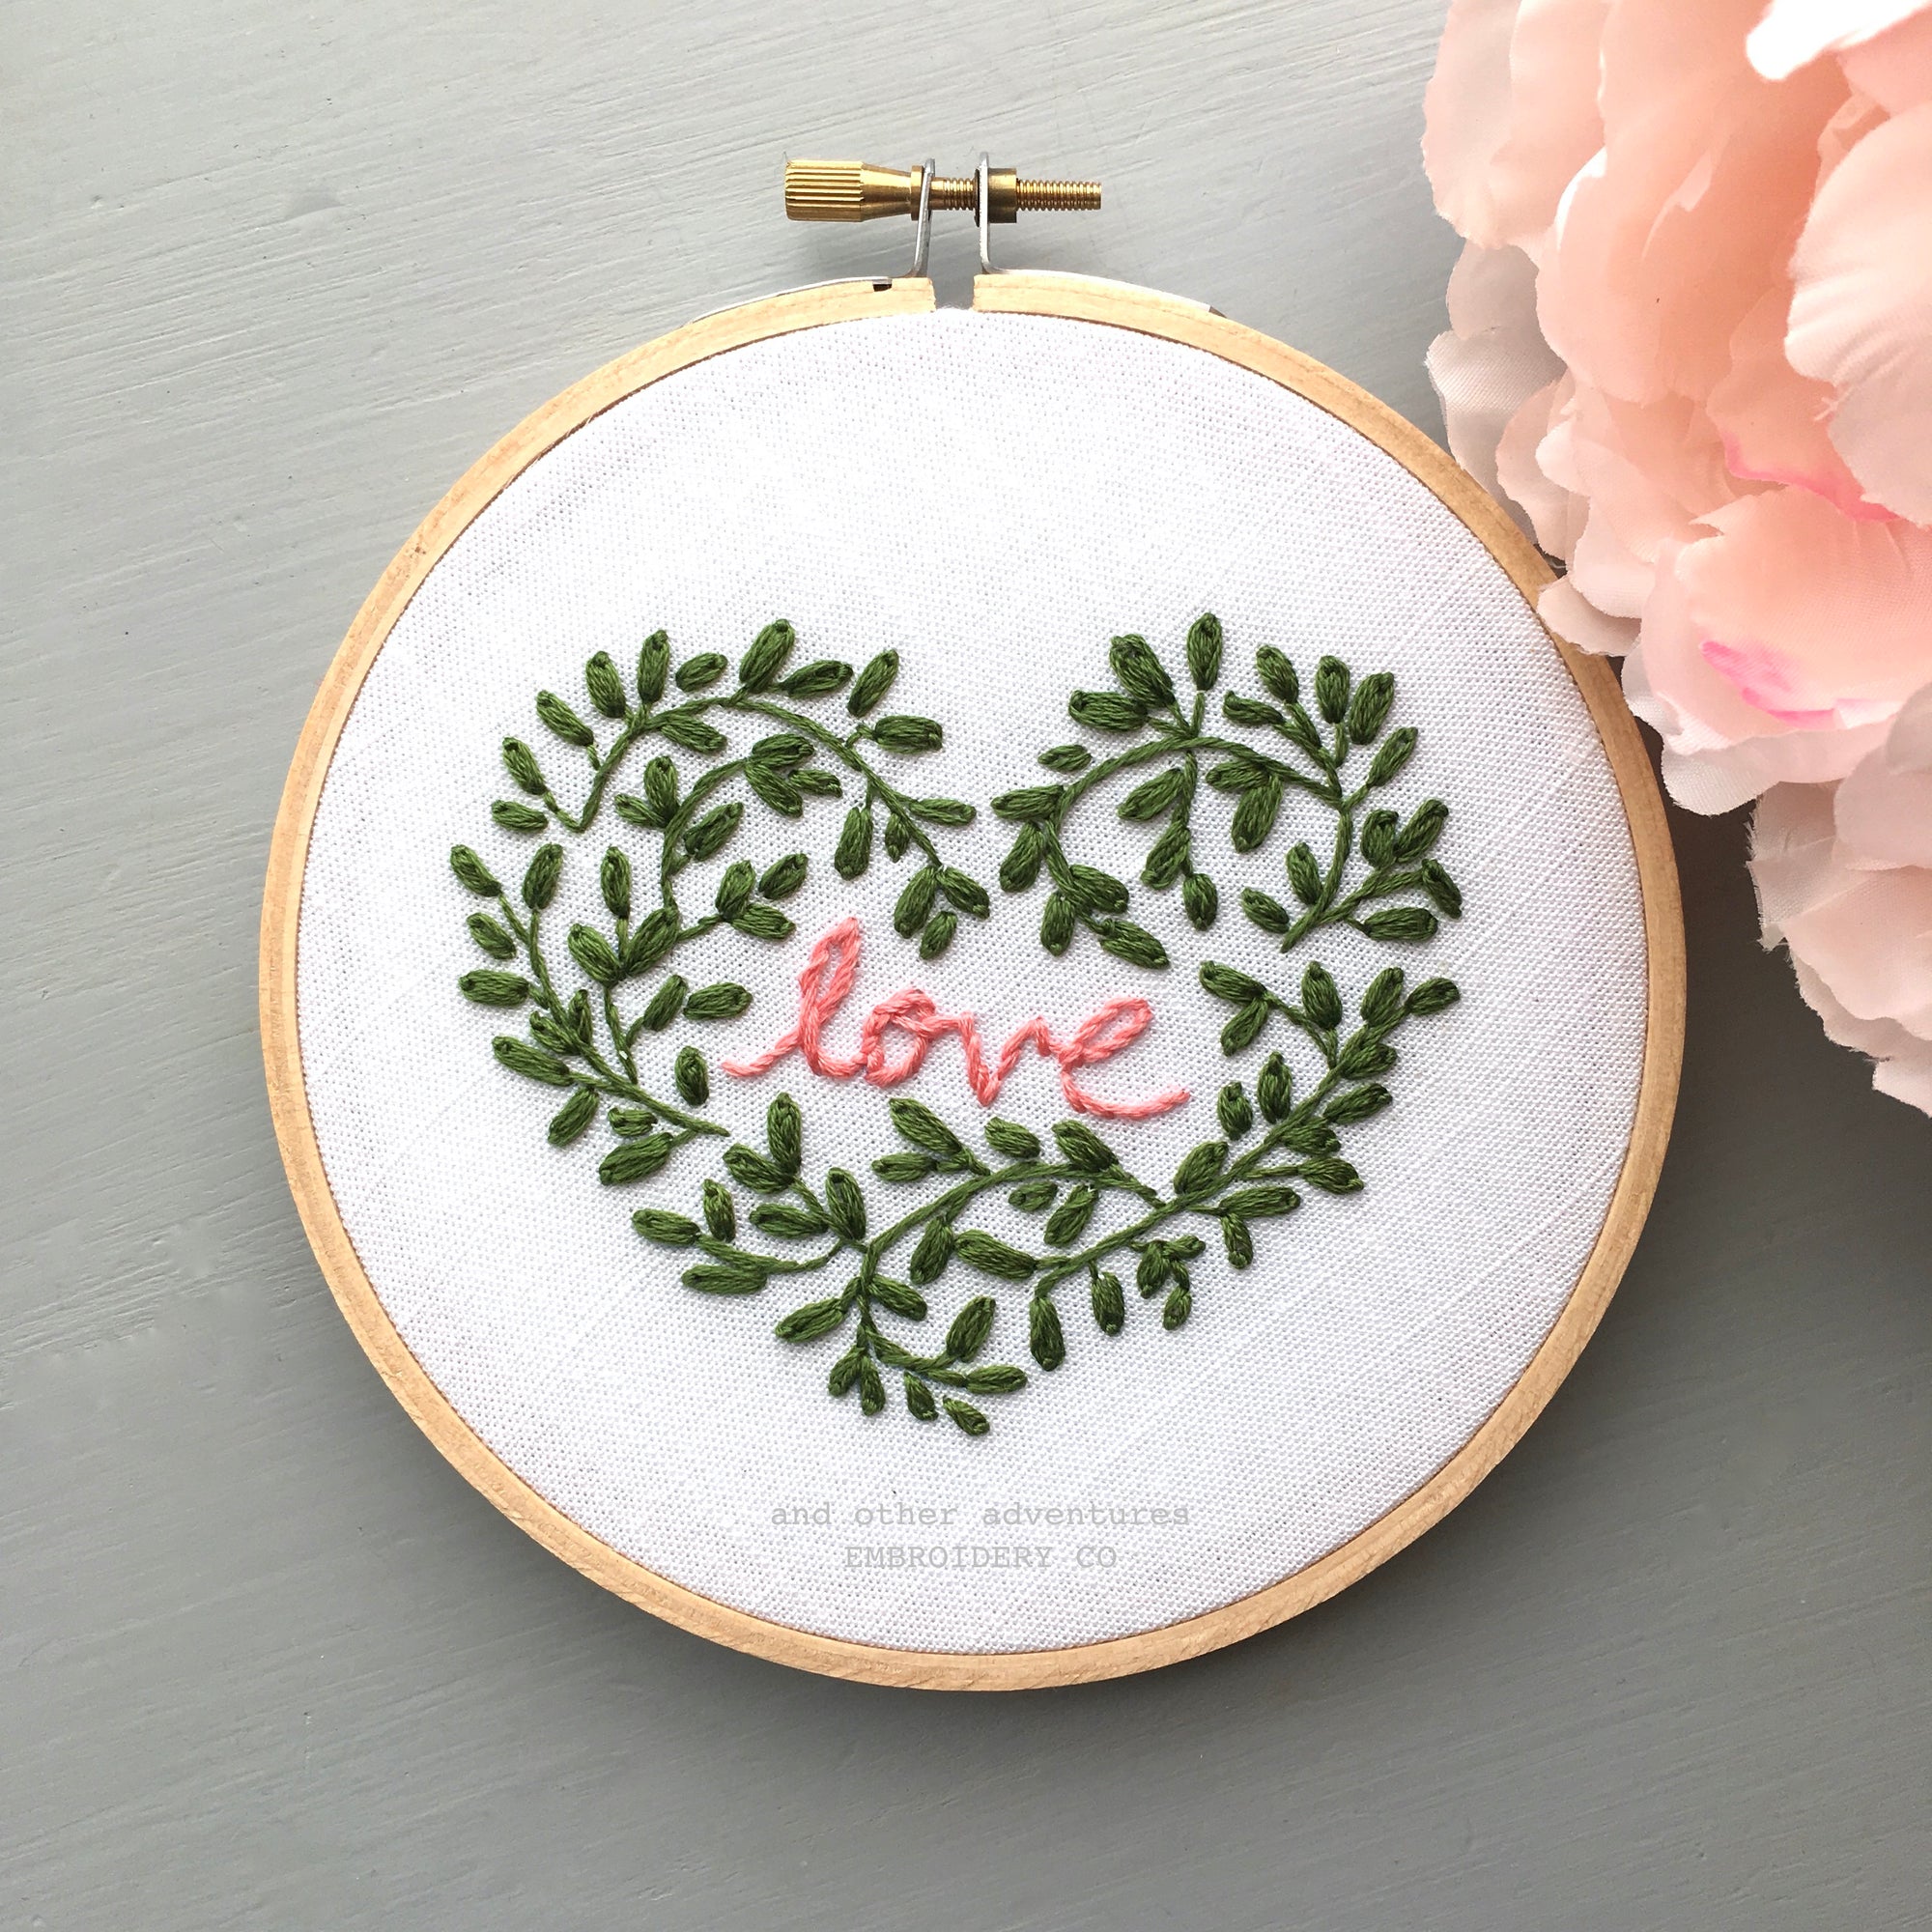 LOVE Heart - Beginner Hand Embroidery Pattern